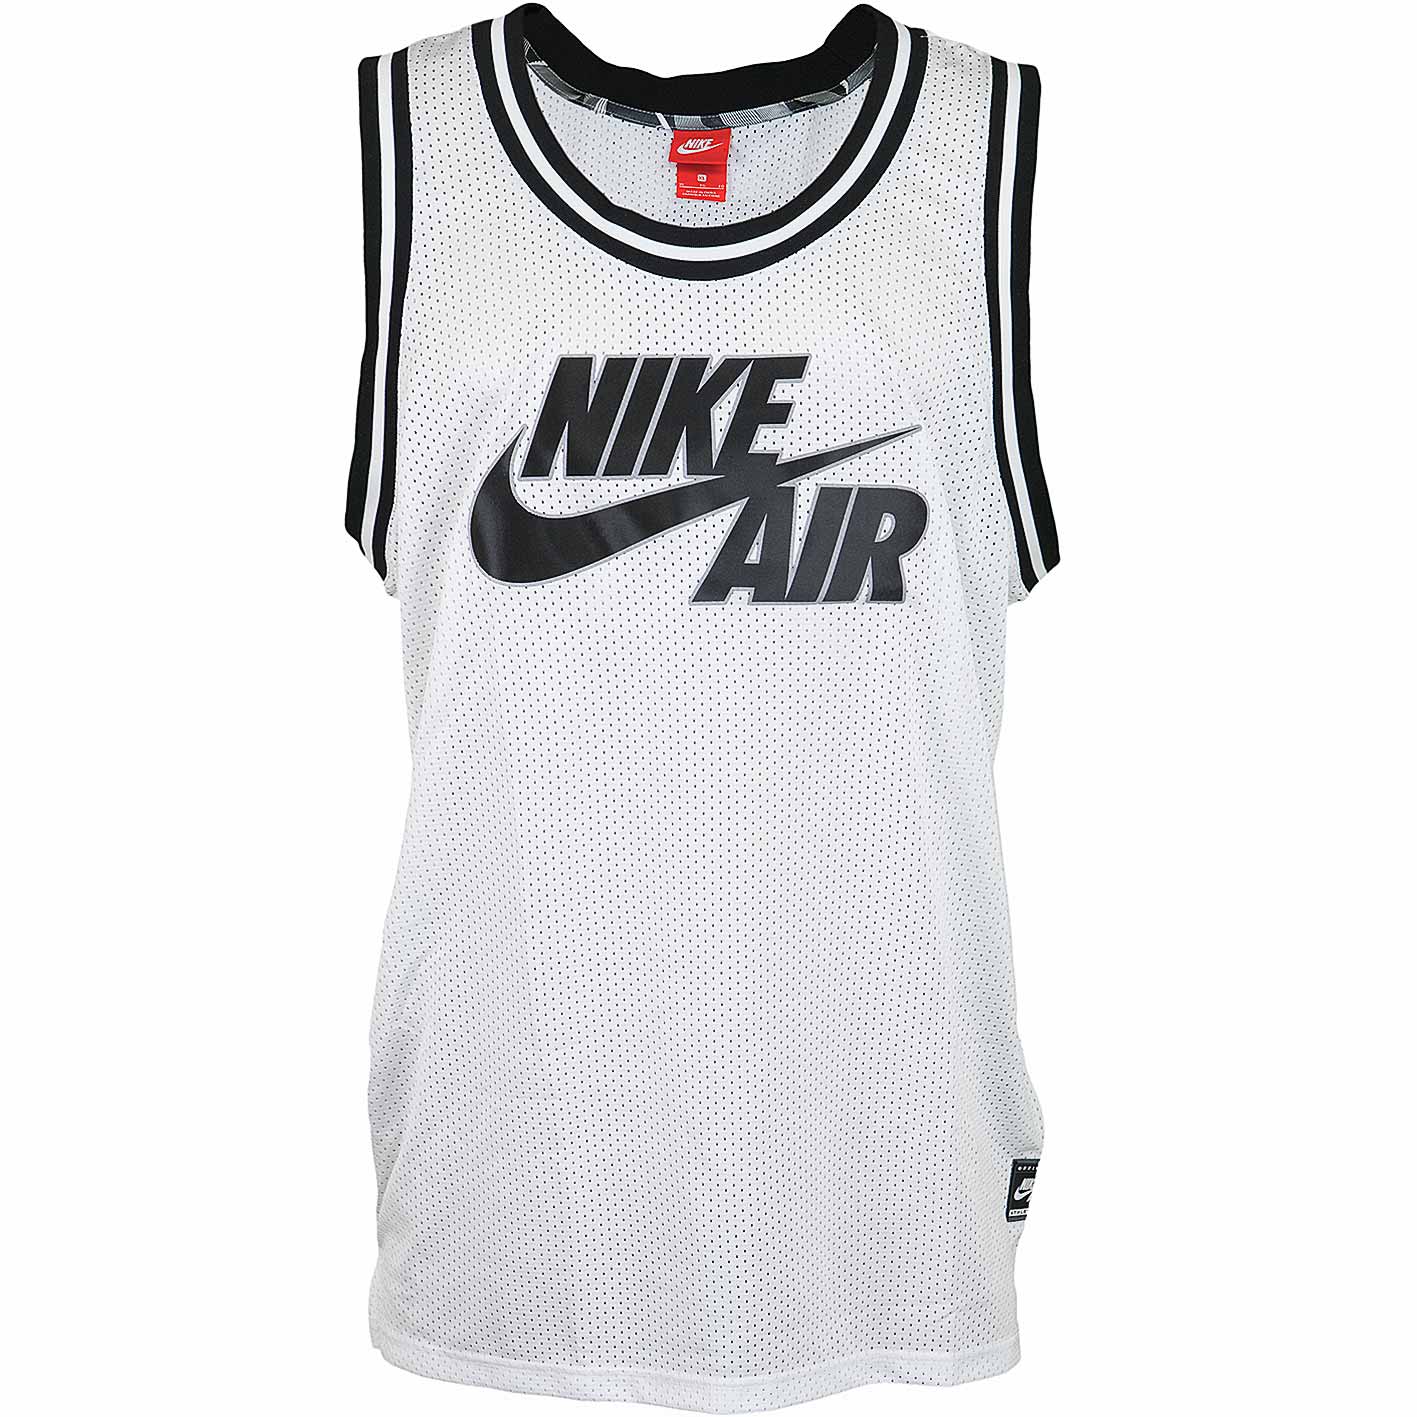 ☆ Nike Tanktop Air Jersey weiß - hier bestellen!